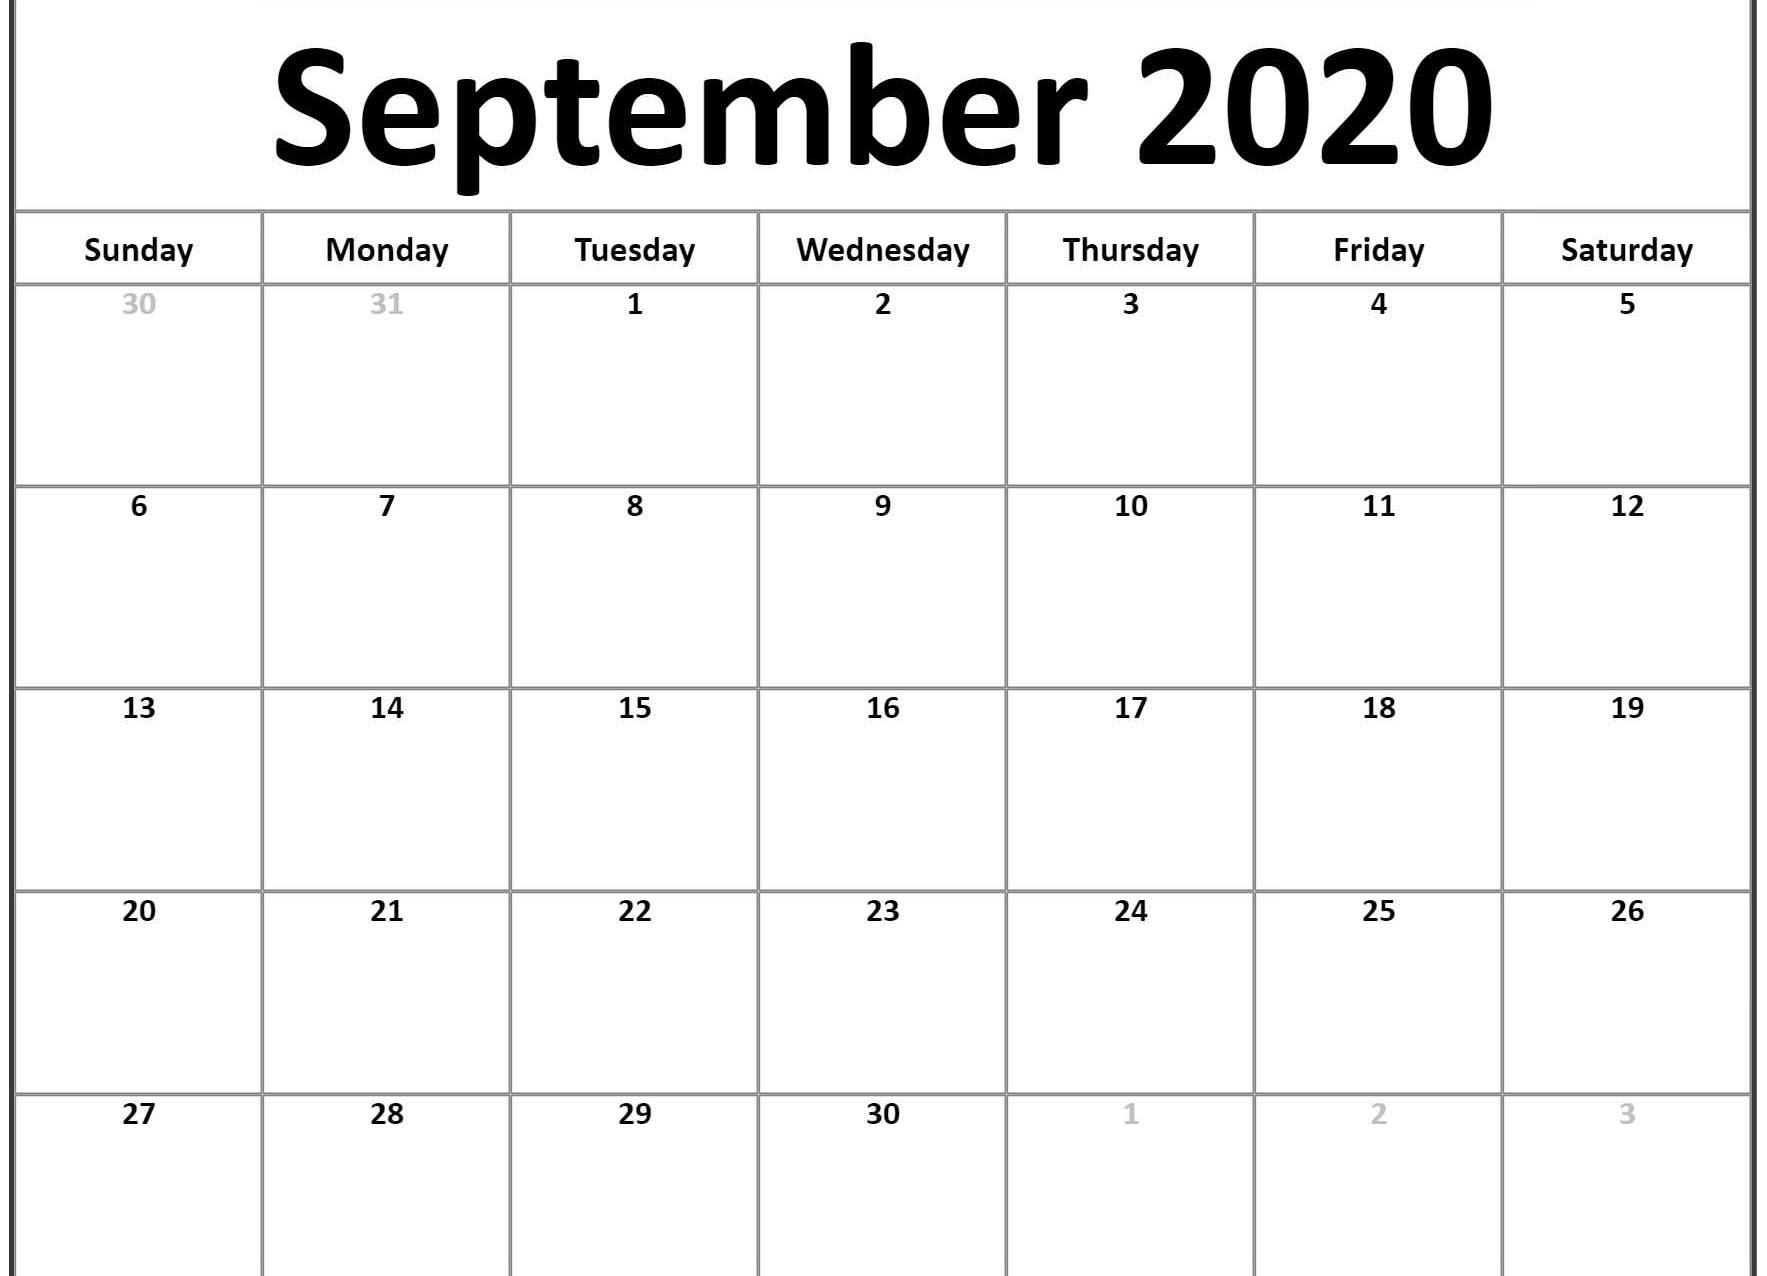 September 2020 Calendar Template In 2019 | Calendar Word